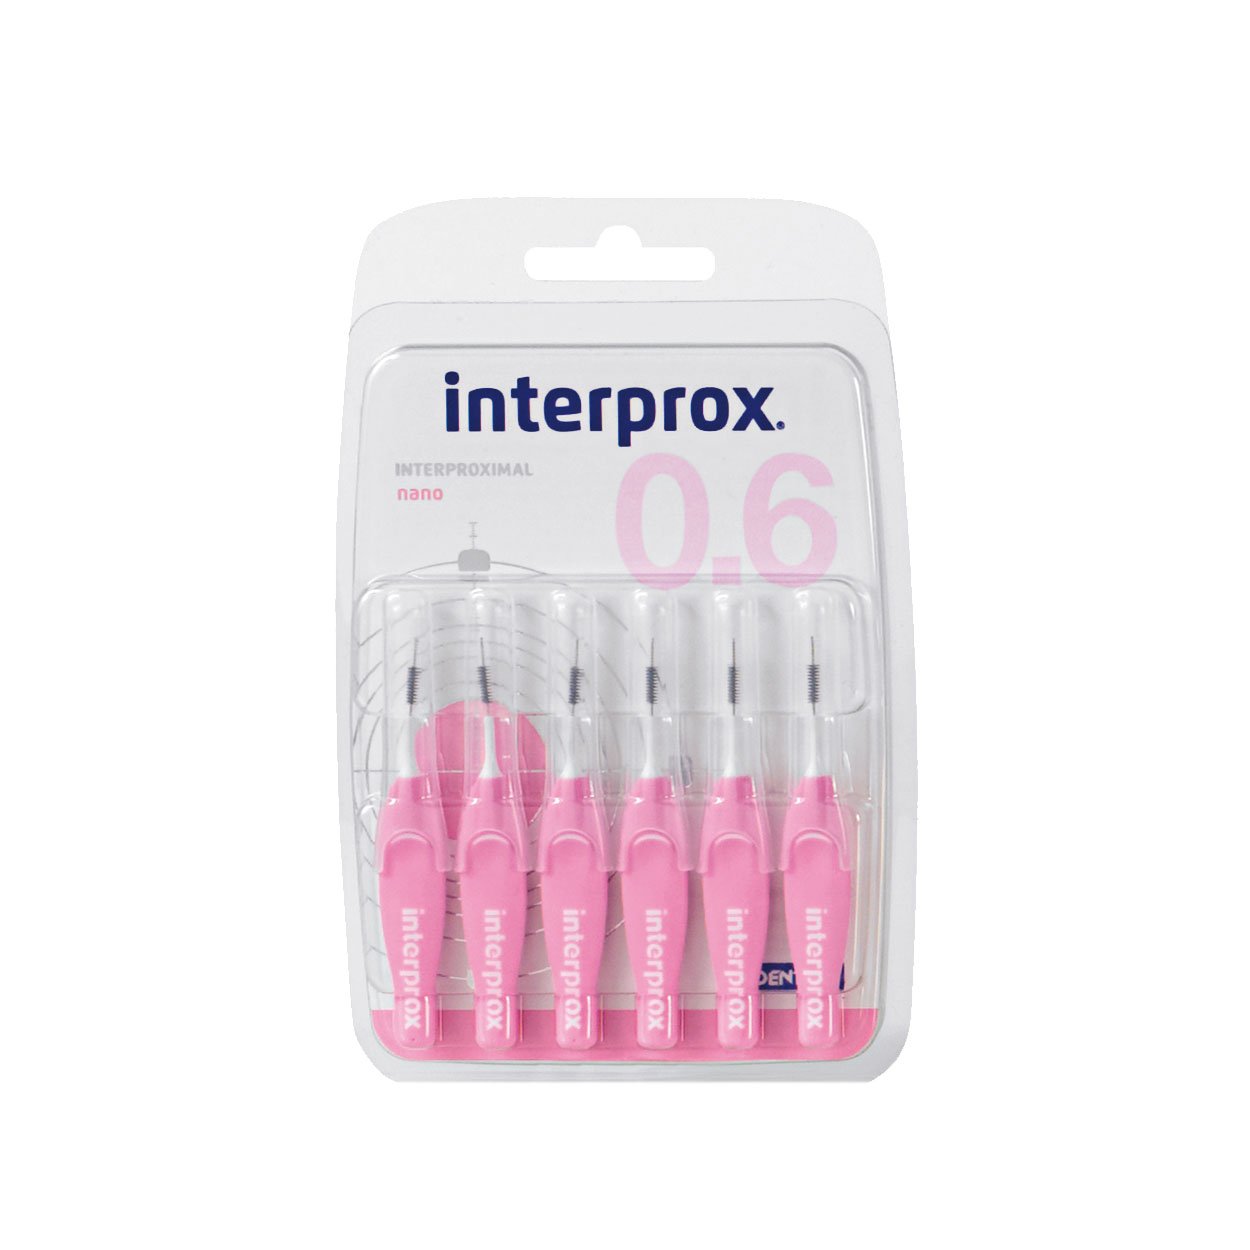 Interprox Interdentalbürsten rosa nano 6 Stück, 6er Pack (6x 6 Stück)